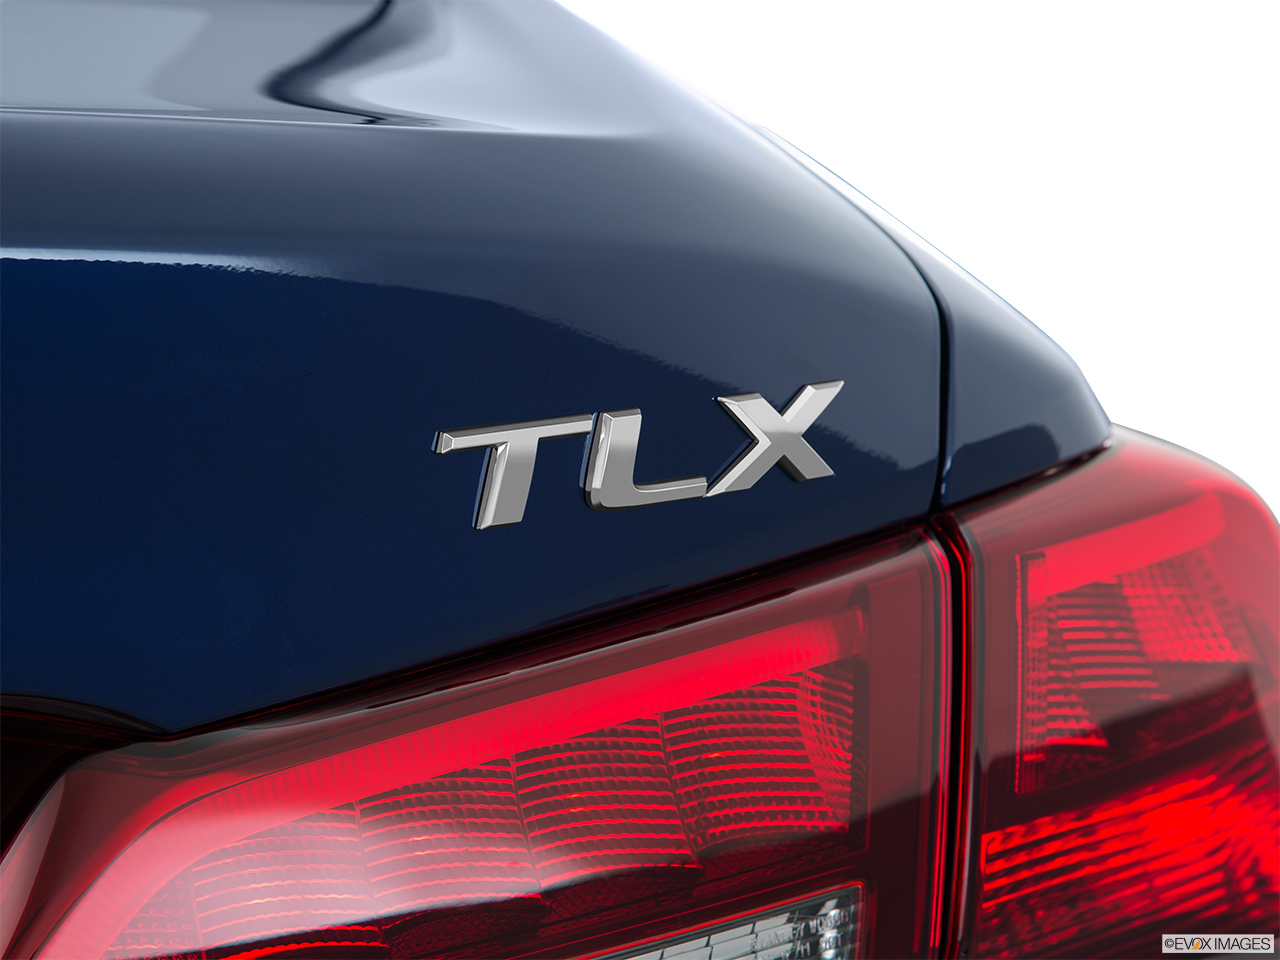 2016 Acura TLX 3.5 V-6 9-AT P-AWS Rear model badge/emblem 